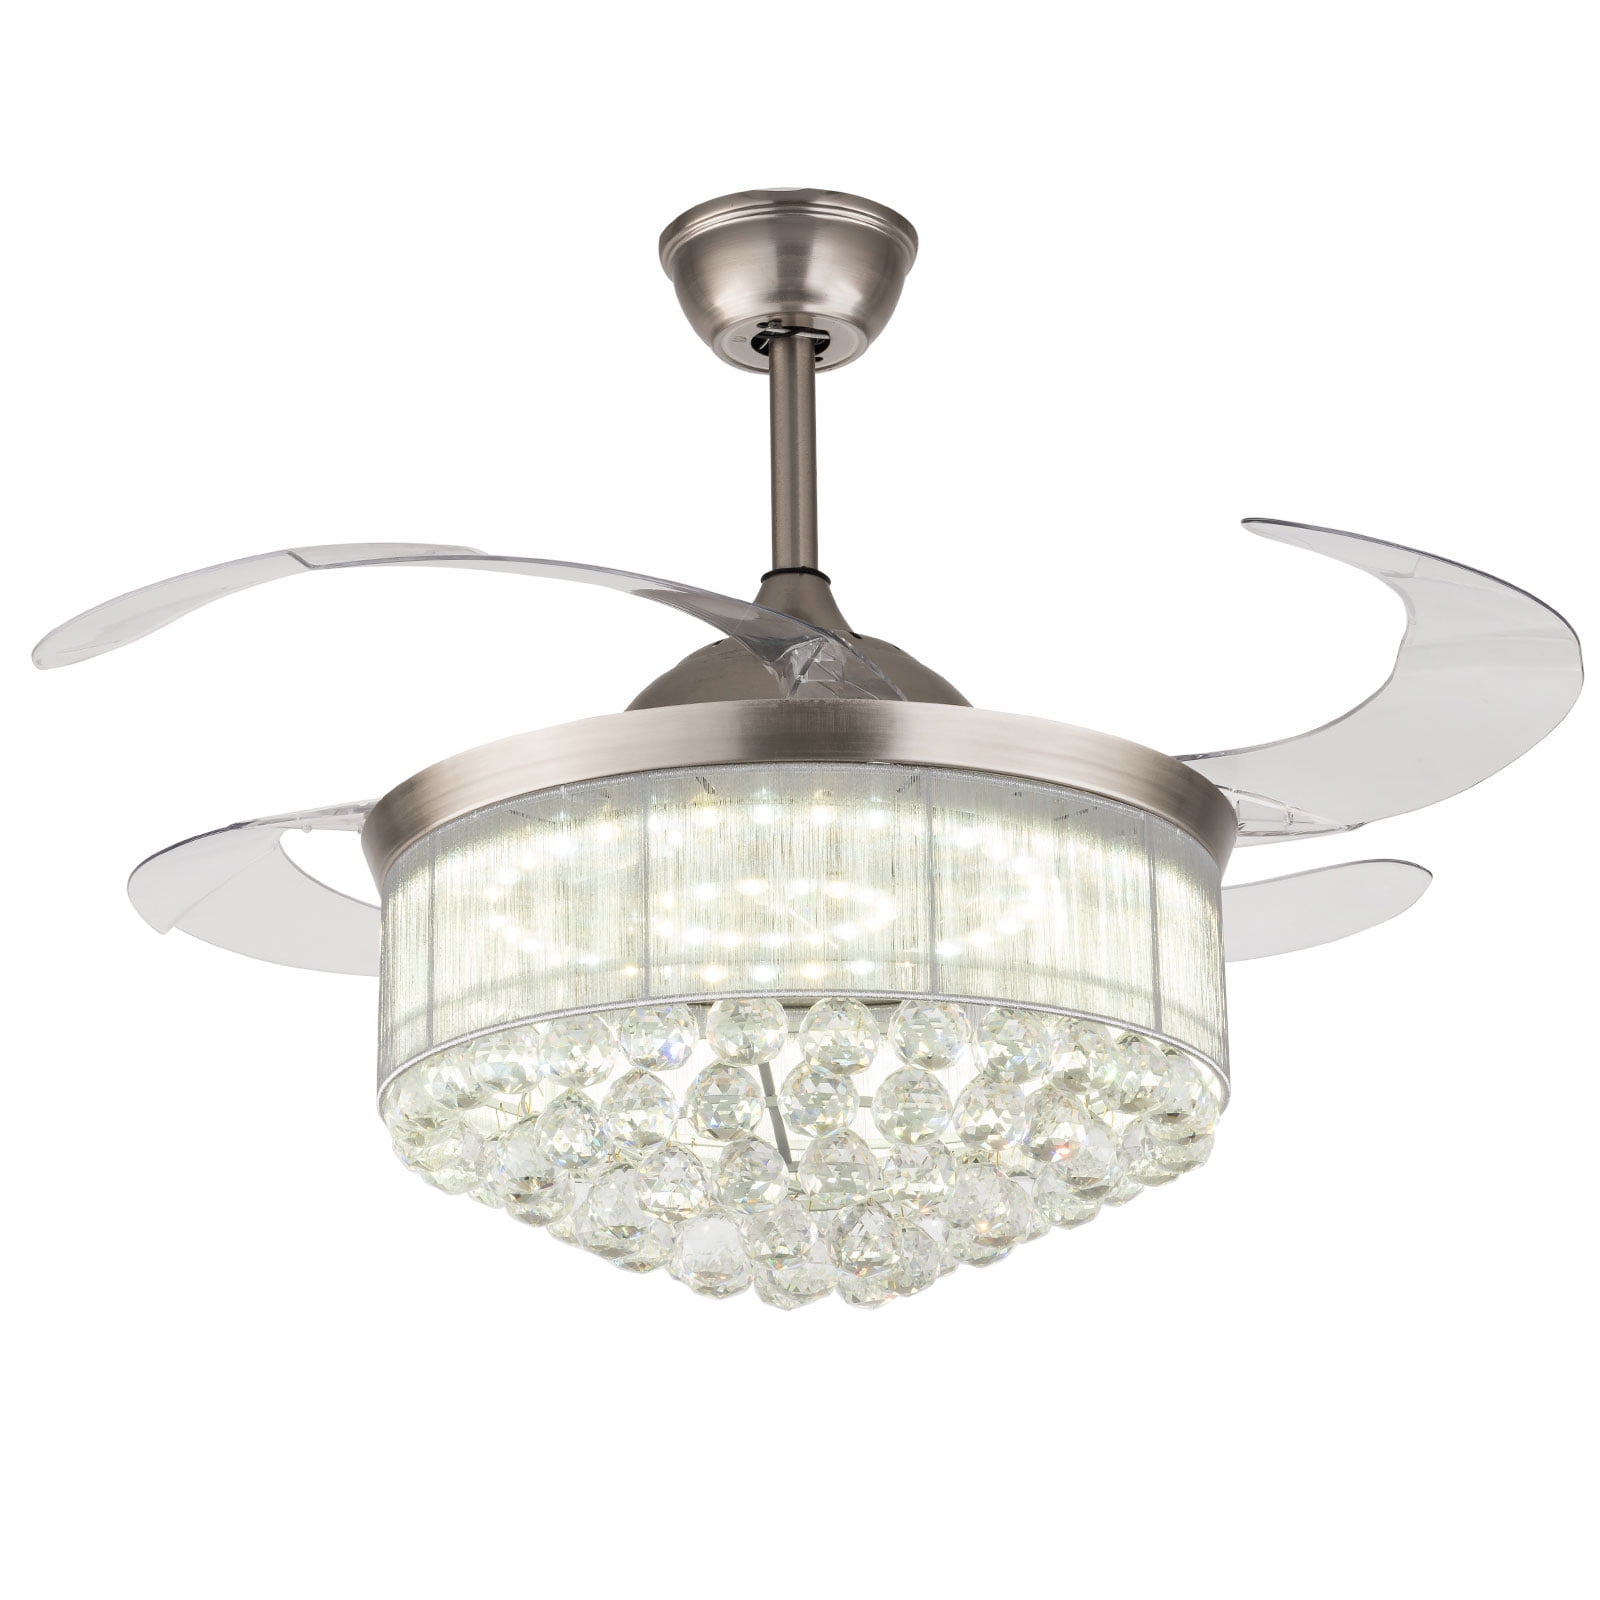 Modern 52'' 3Blades Ceiling Fan Light Kit Remote Control LED Color Changing Lamp 